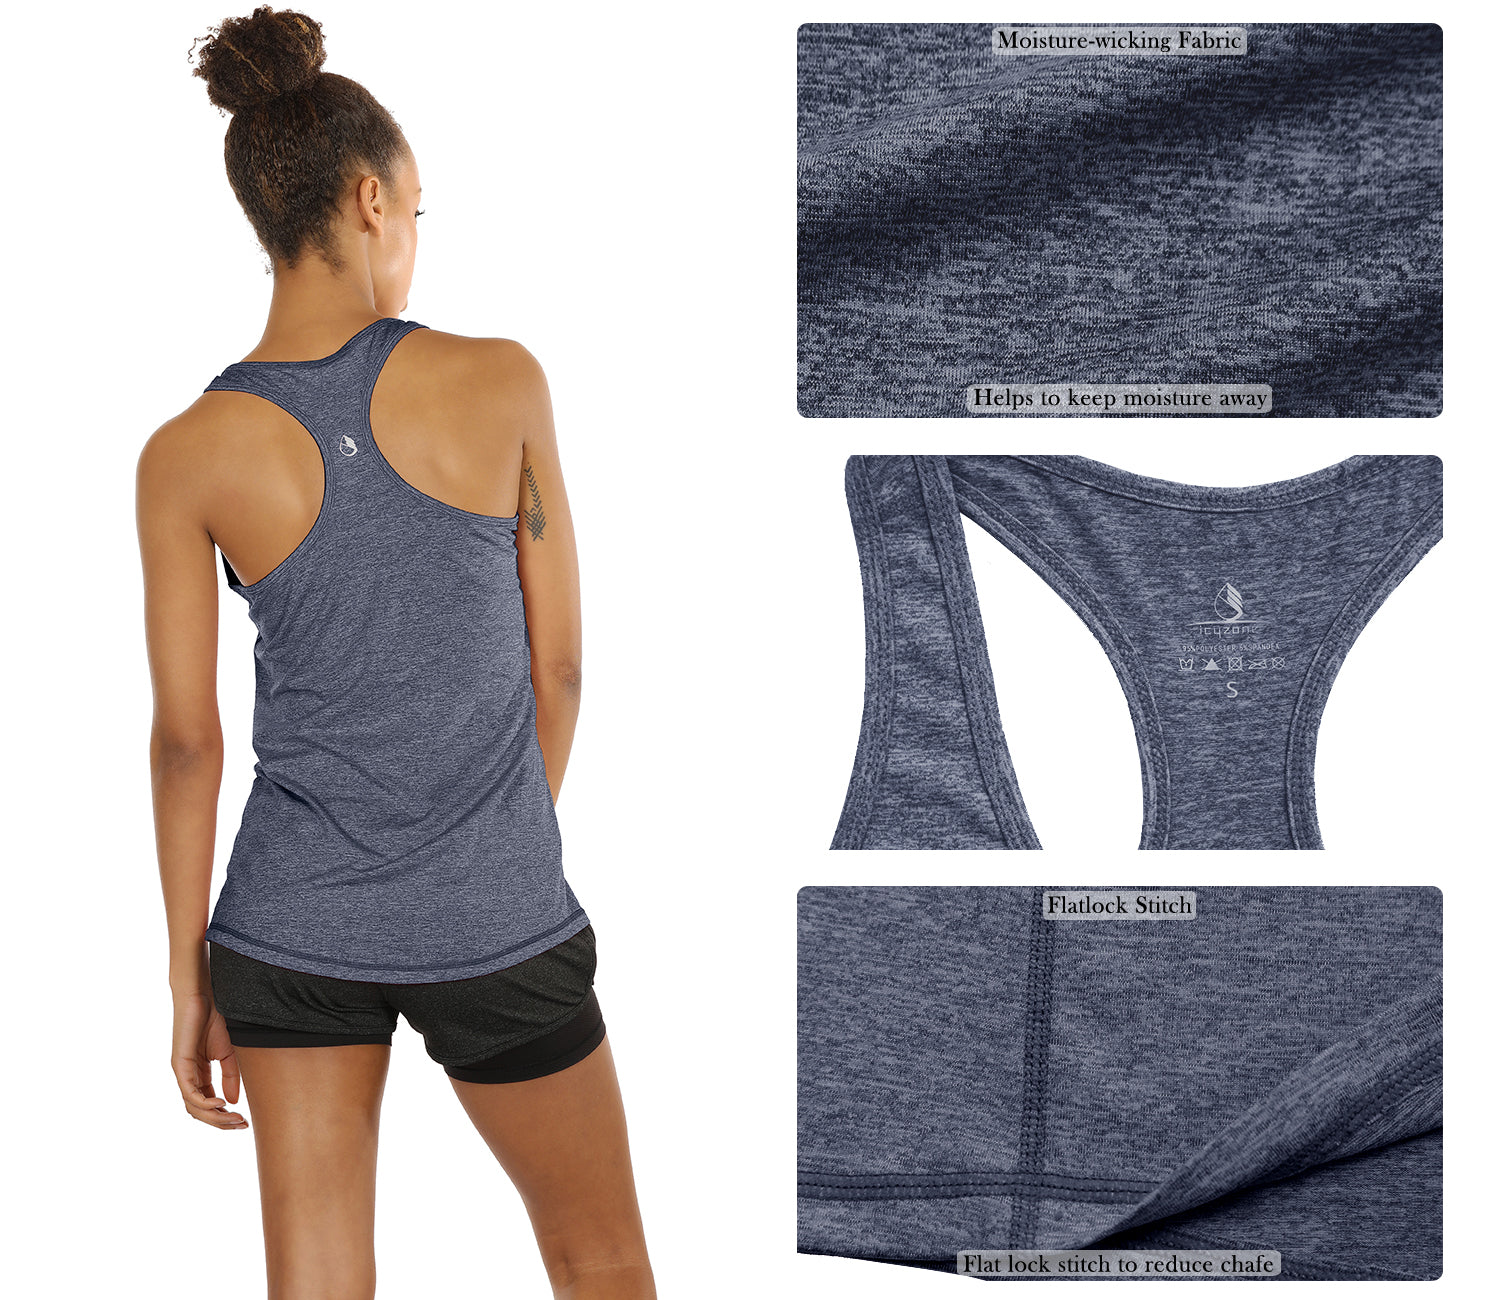 Joviren Cotton Workout Crop Tank Top for Women Racerback Yoga Tank Tops Athletic  Sports Shirts Exercise Undershirts 4 Pack Black/White/Blue/Red Medium